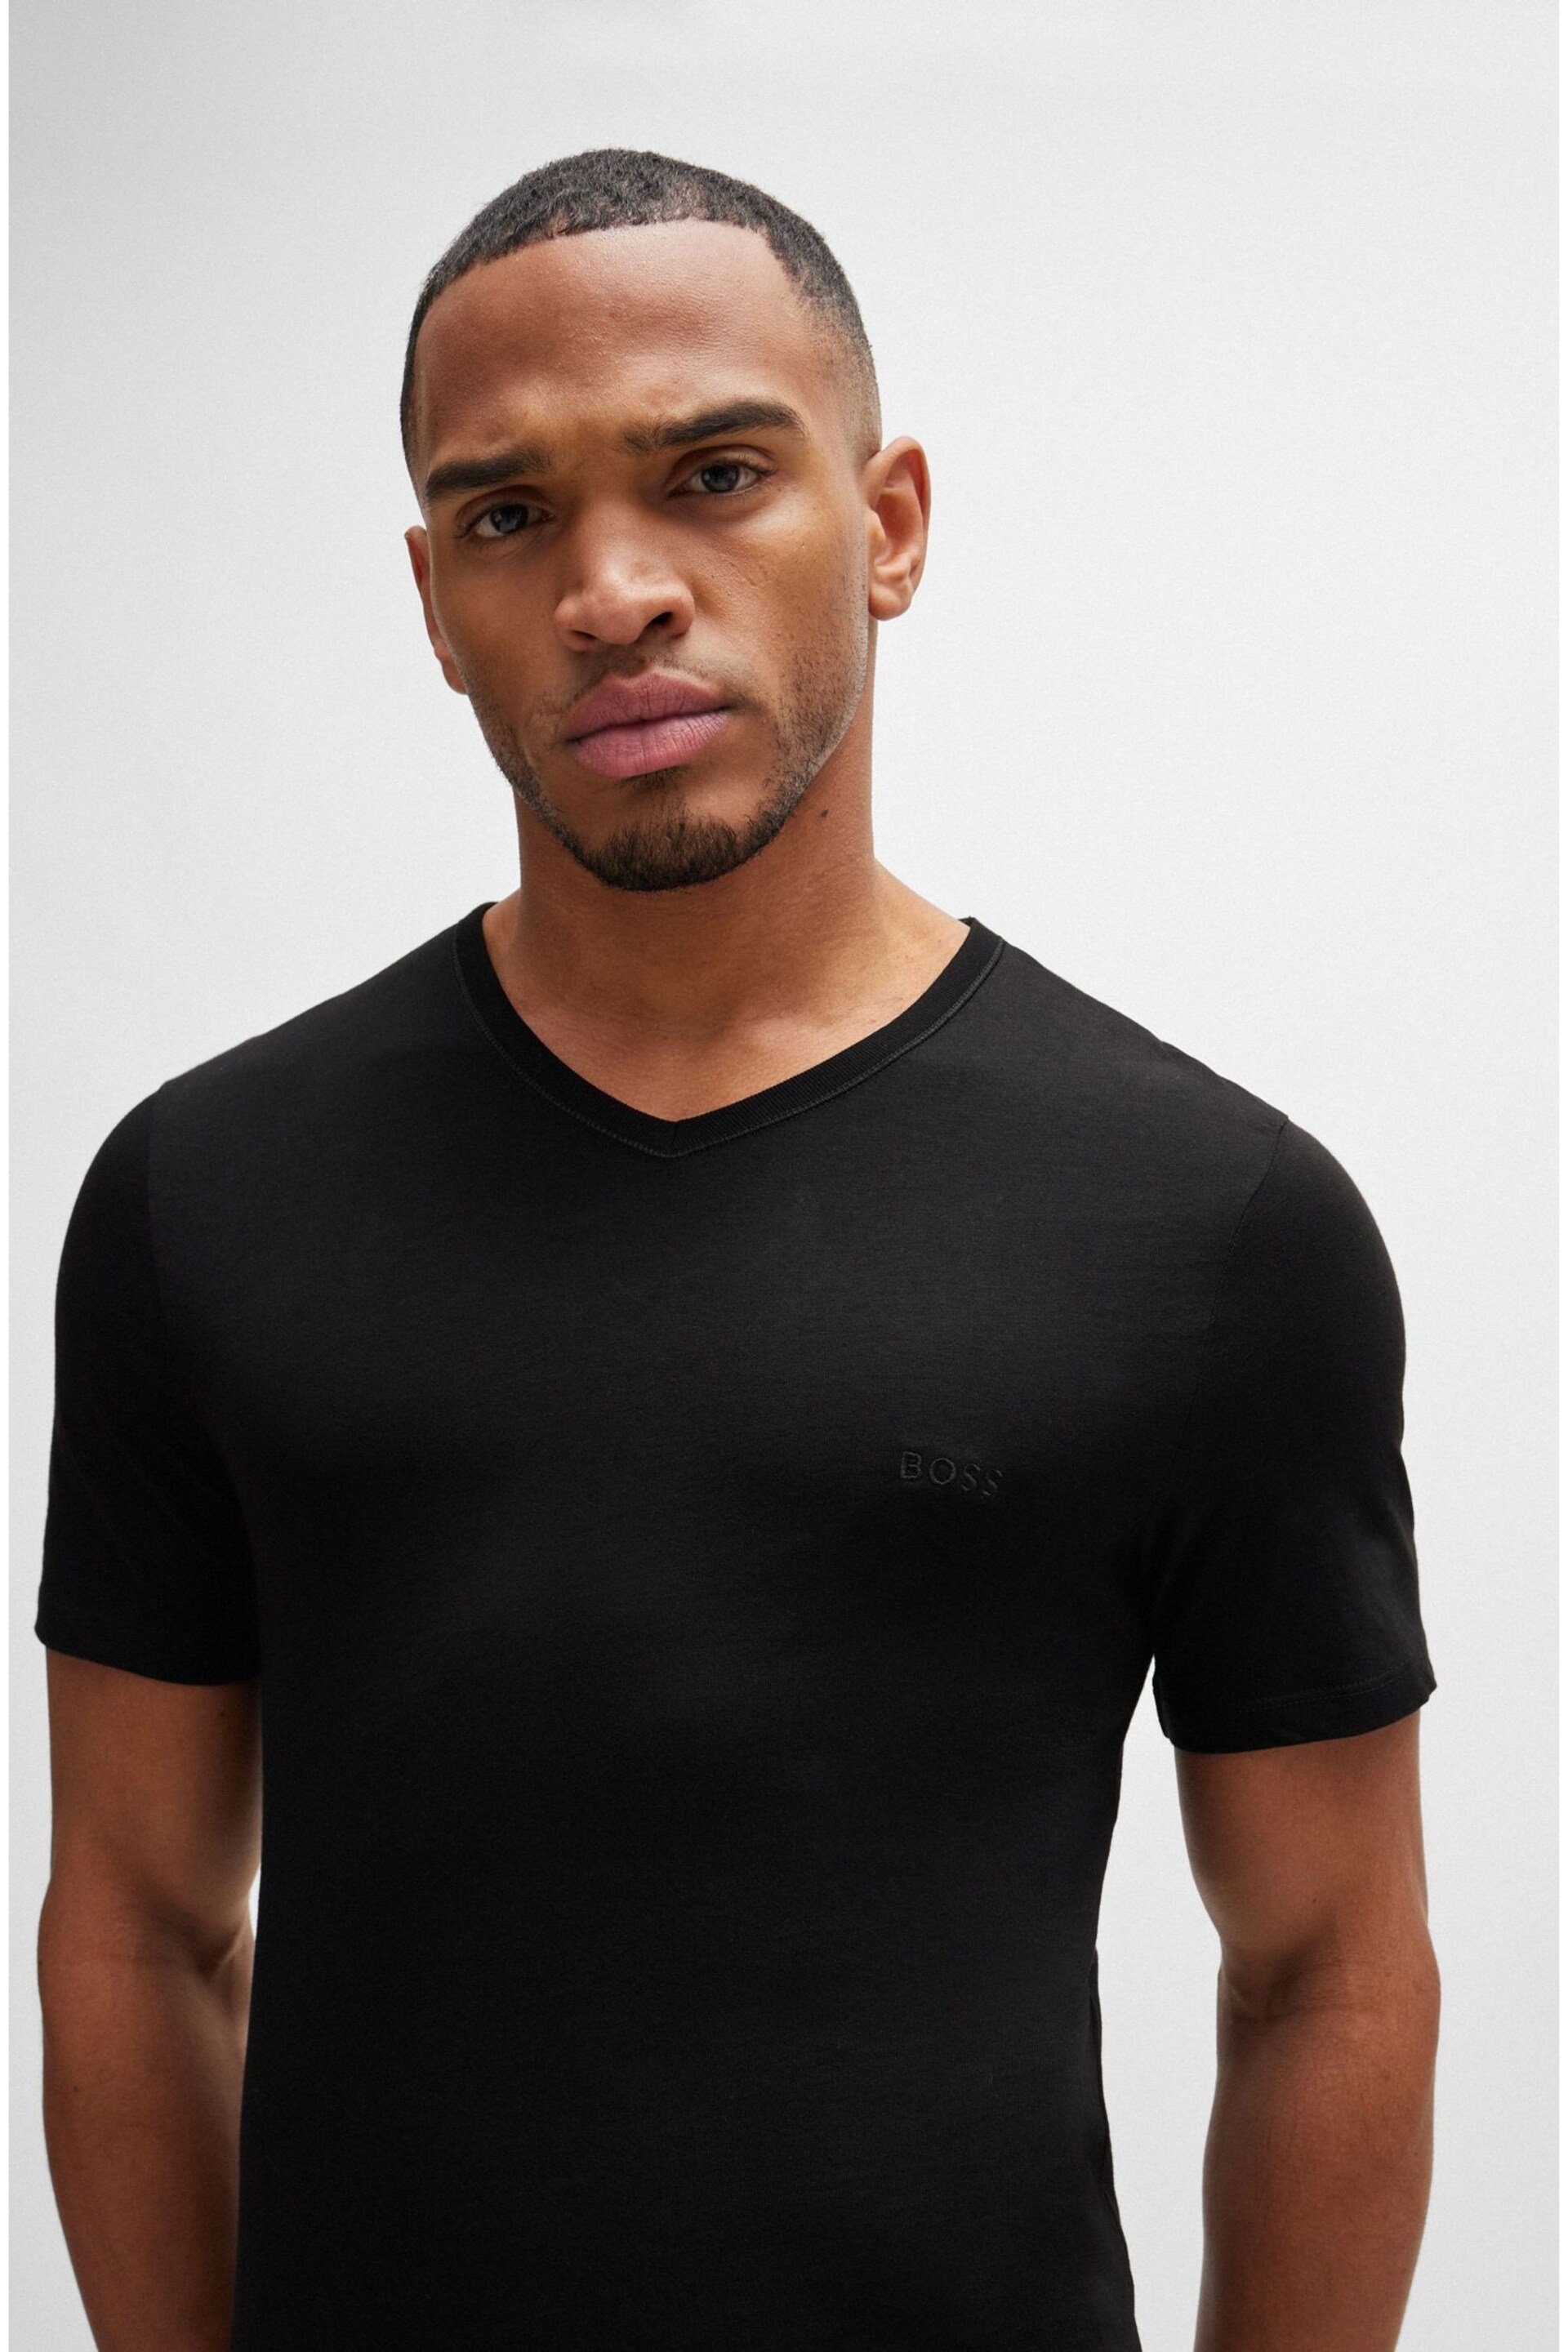 BOSS Black V-Neck Cotton Jersey T-Shirts 3 Pack - Image 3 of 5